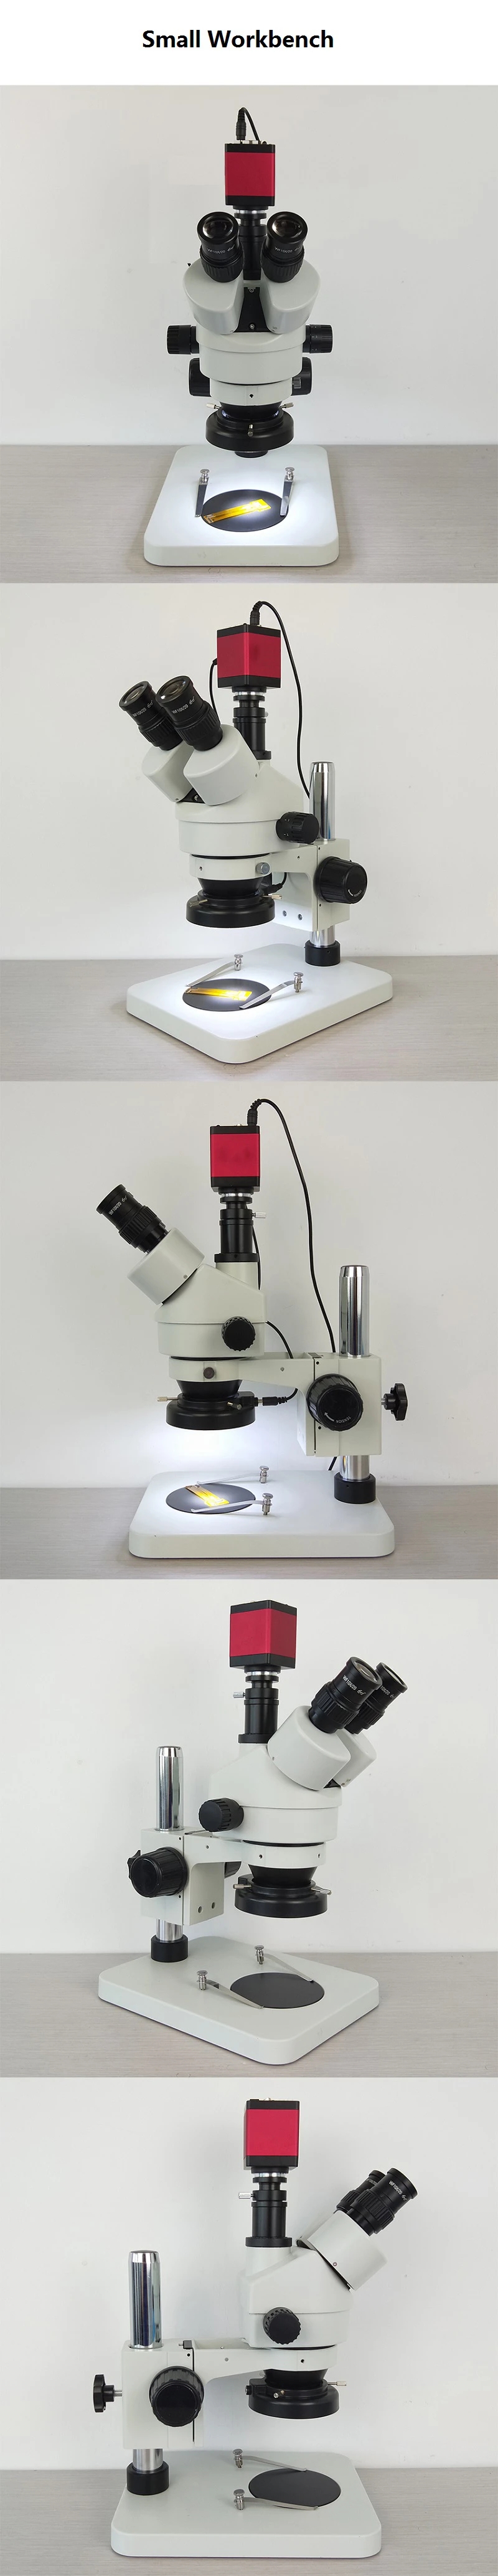 Efix-07-45X-13MP-Trinocular-Stereo-Soldering-Microscope-Stand-Lens-Digital-Camera-for-Repair-Mobile--1823941-8